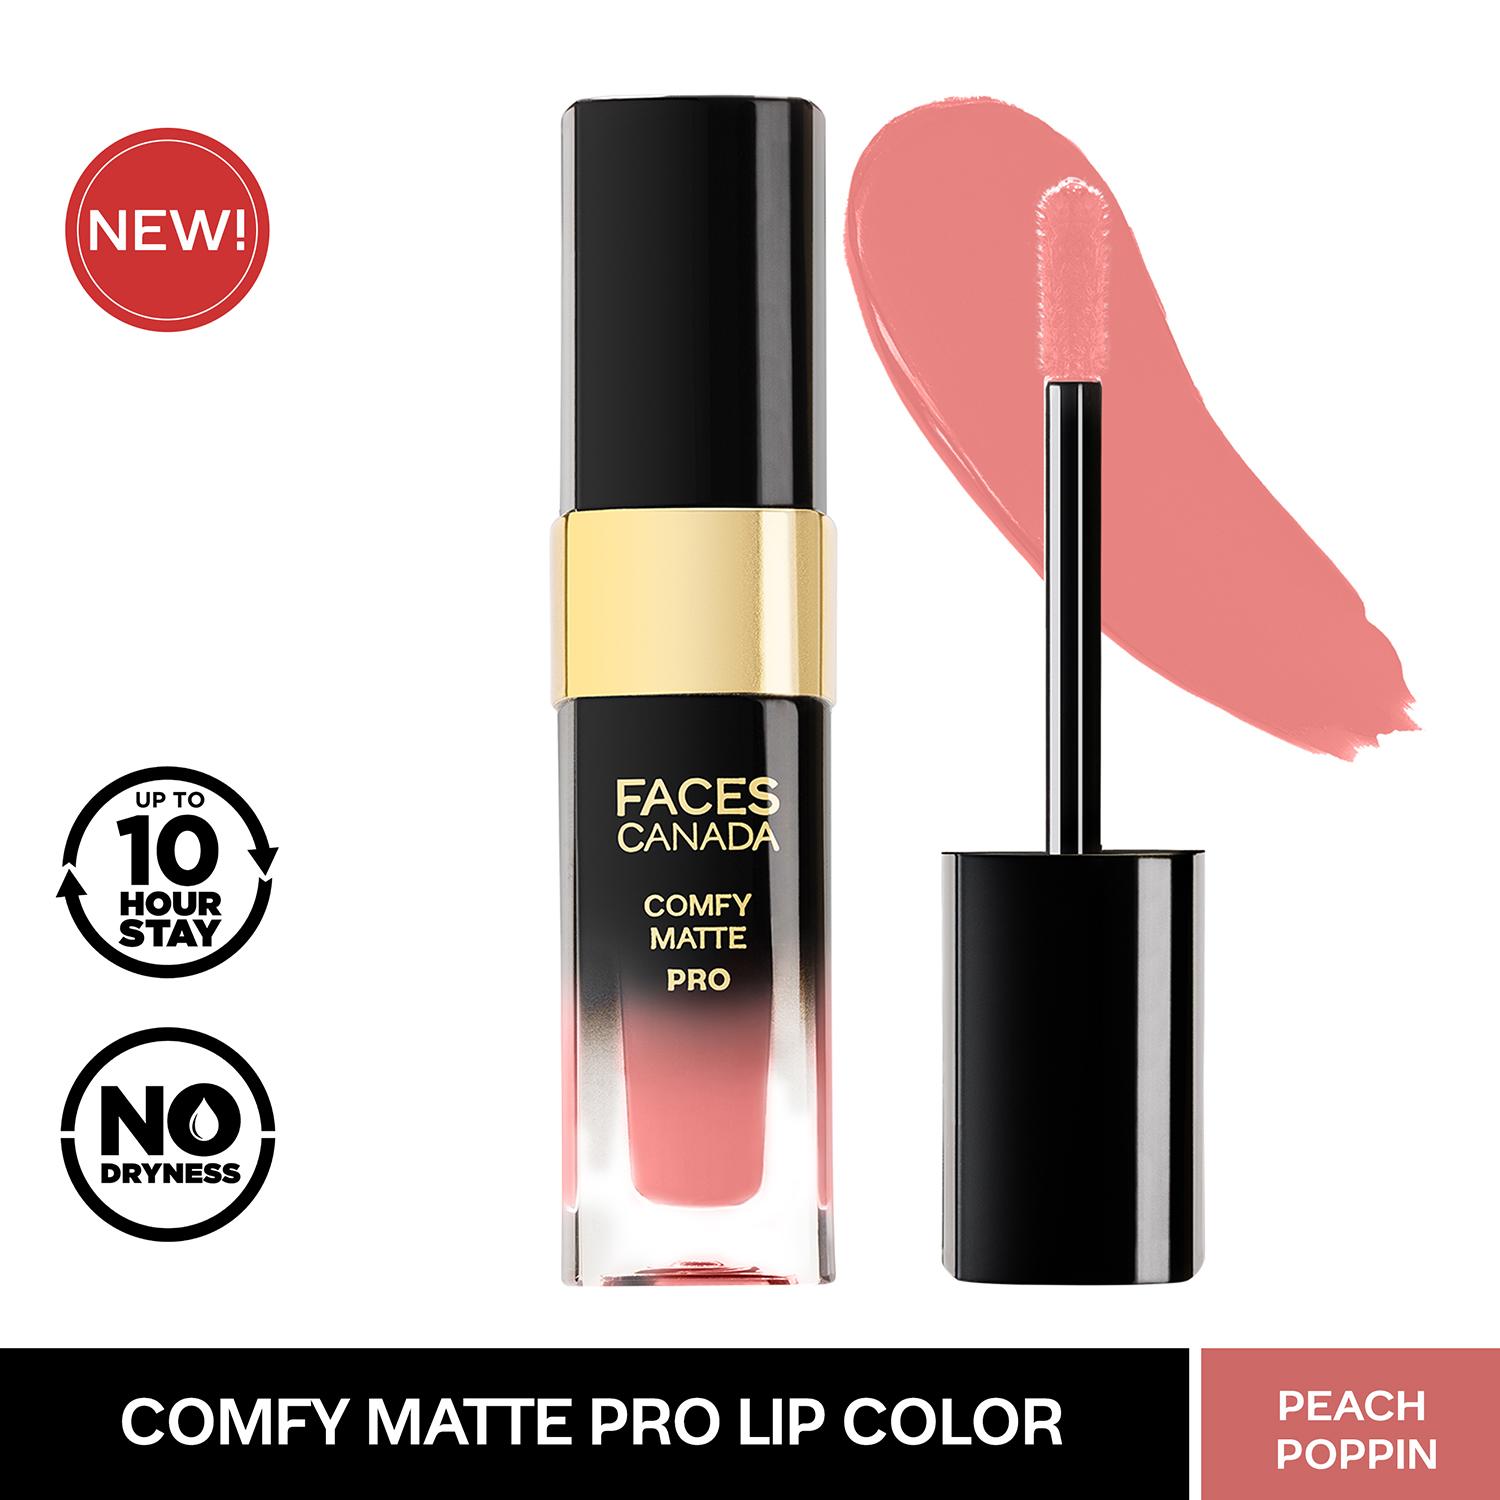 Faces Canada | Faces Canada Comfy Matte Pro Liquid Lipstick - Peach Poppin 16, 10HR Stay, No Dryness (5.5 ml)